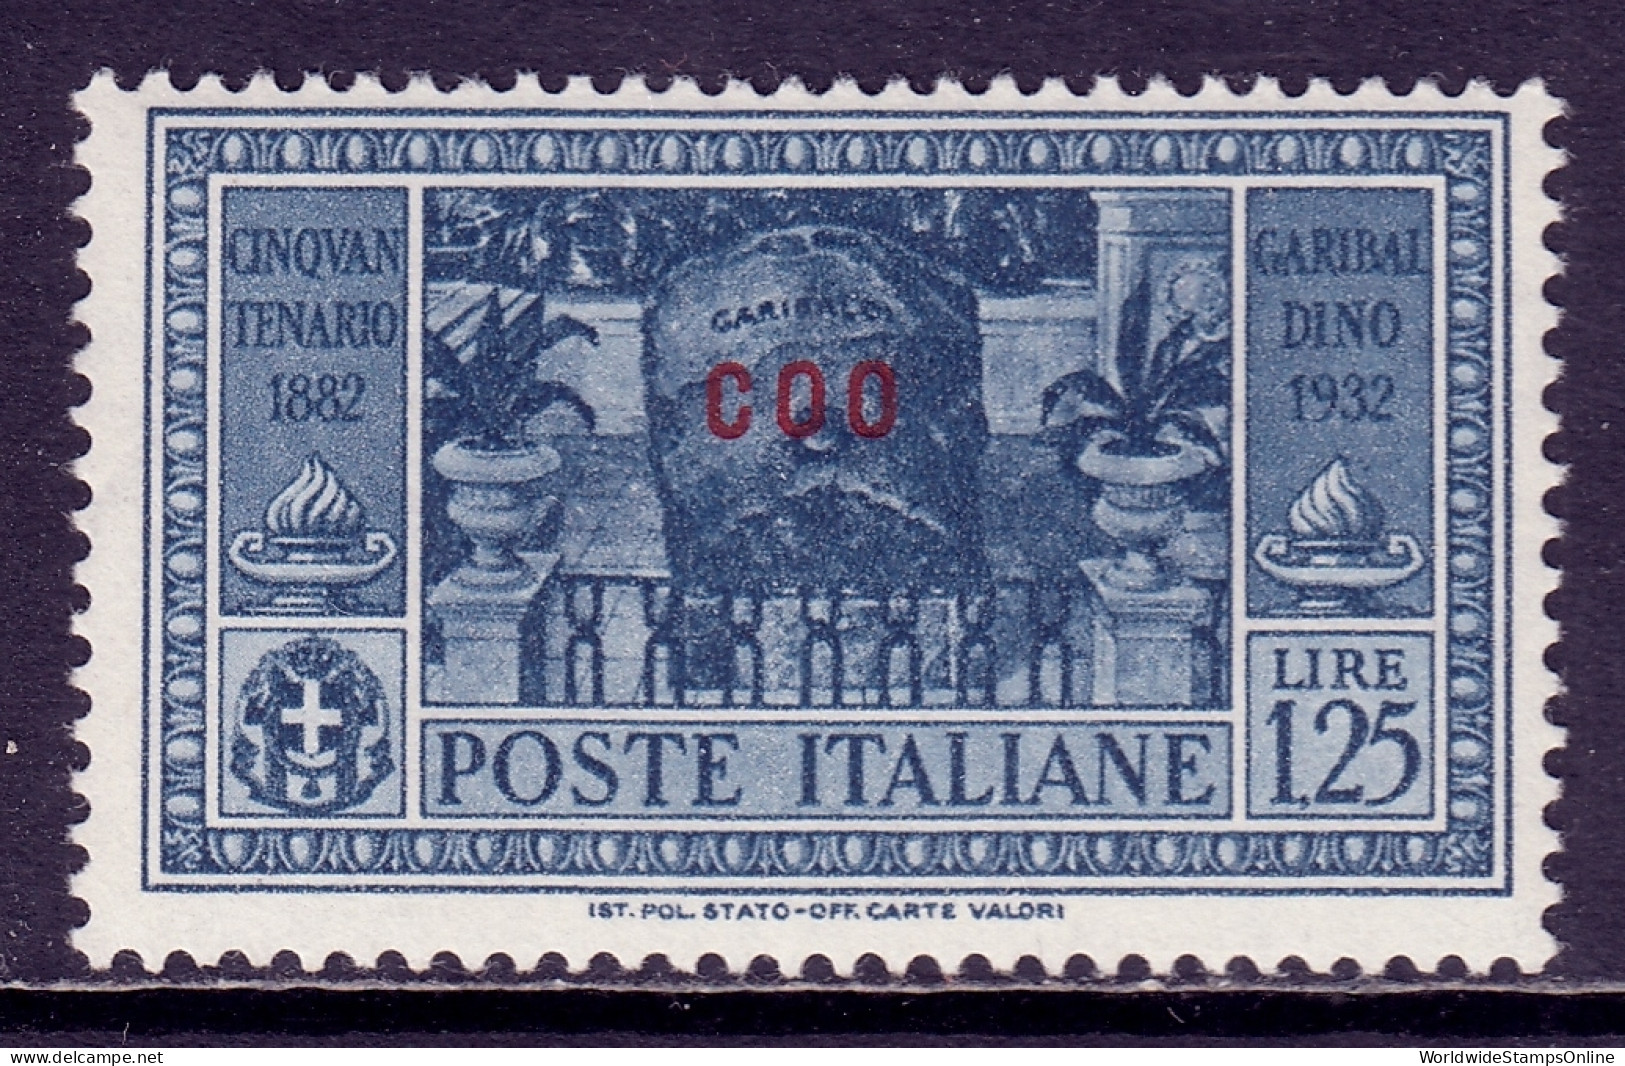 Italy (Coo) - Scott #23 - MH - SCV $18 - Ägäis (Coo)